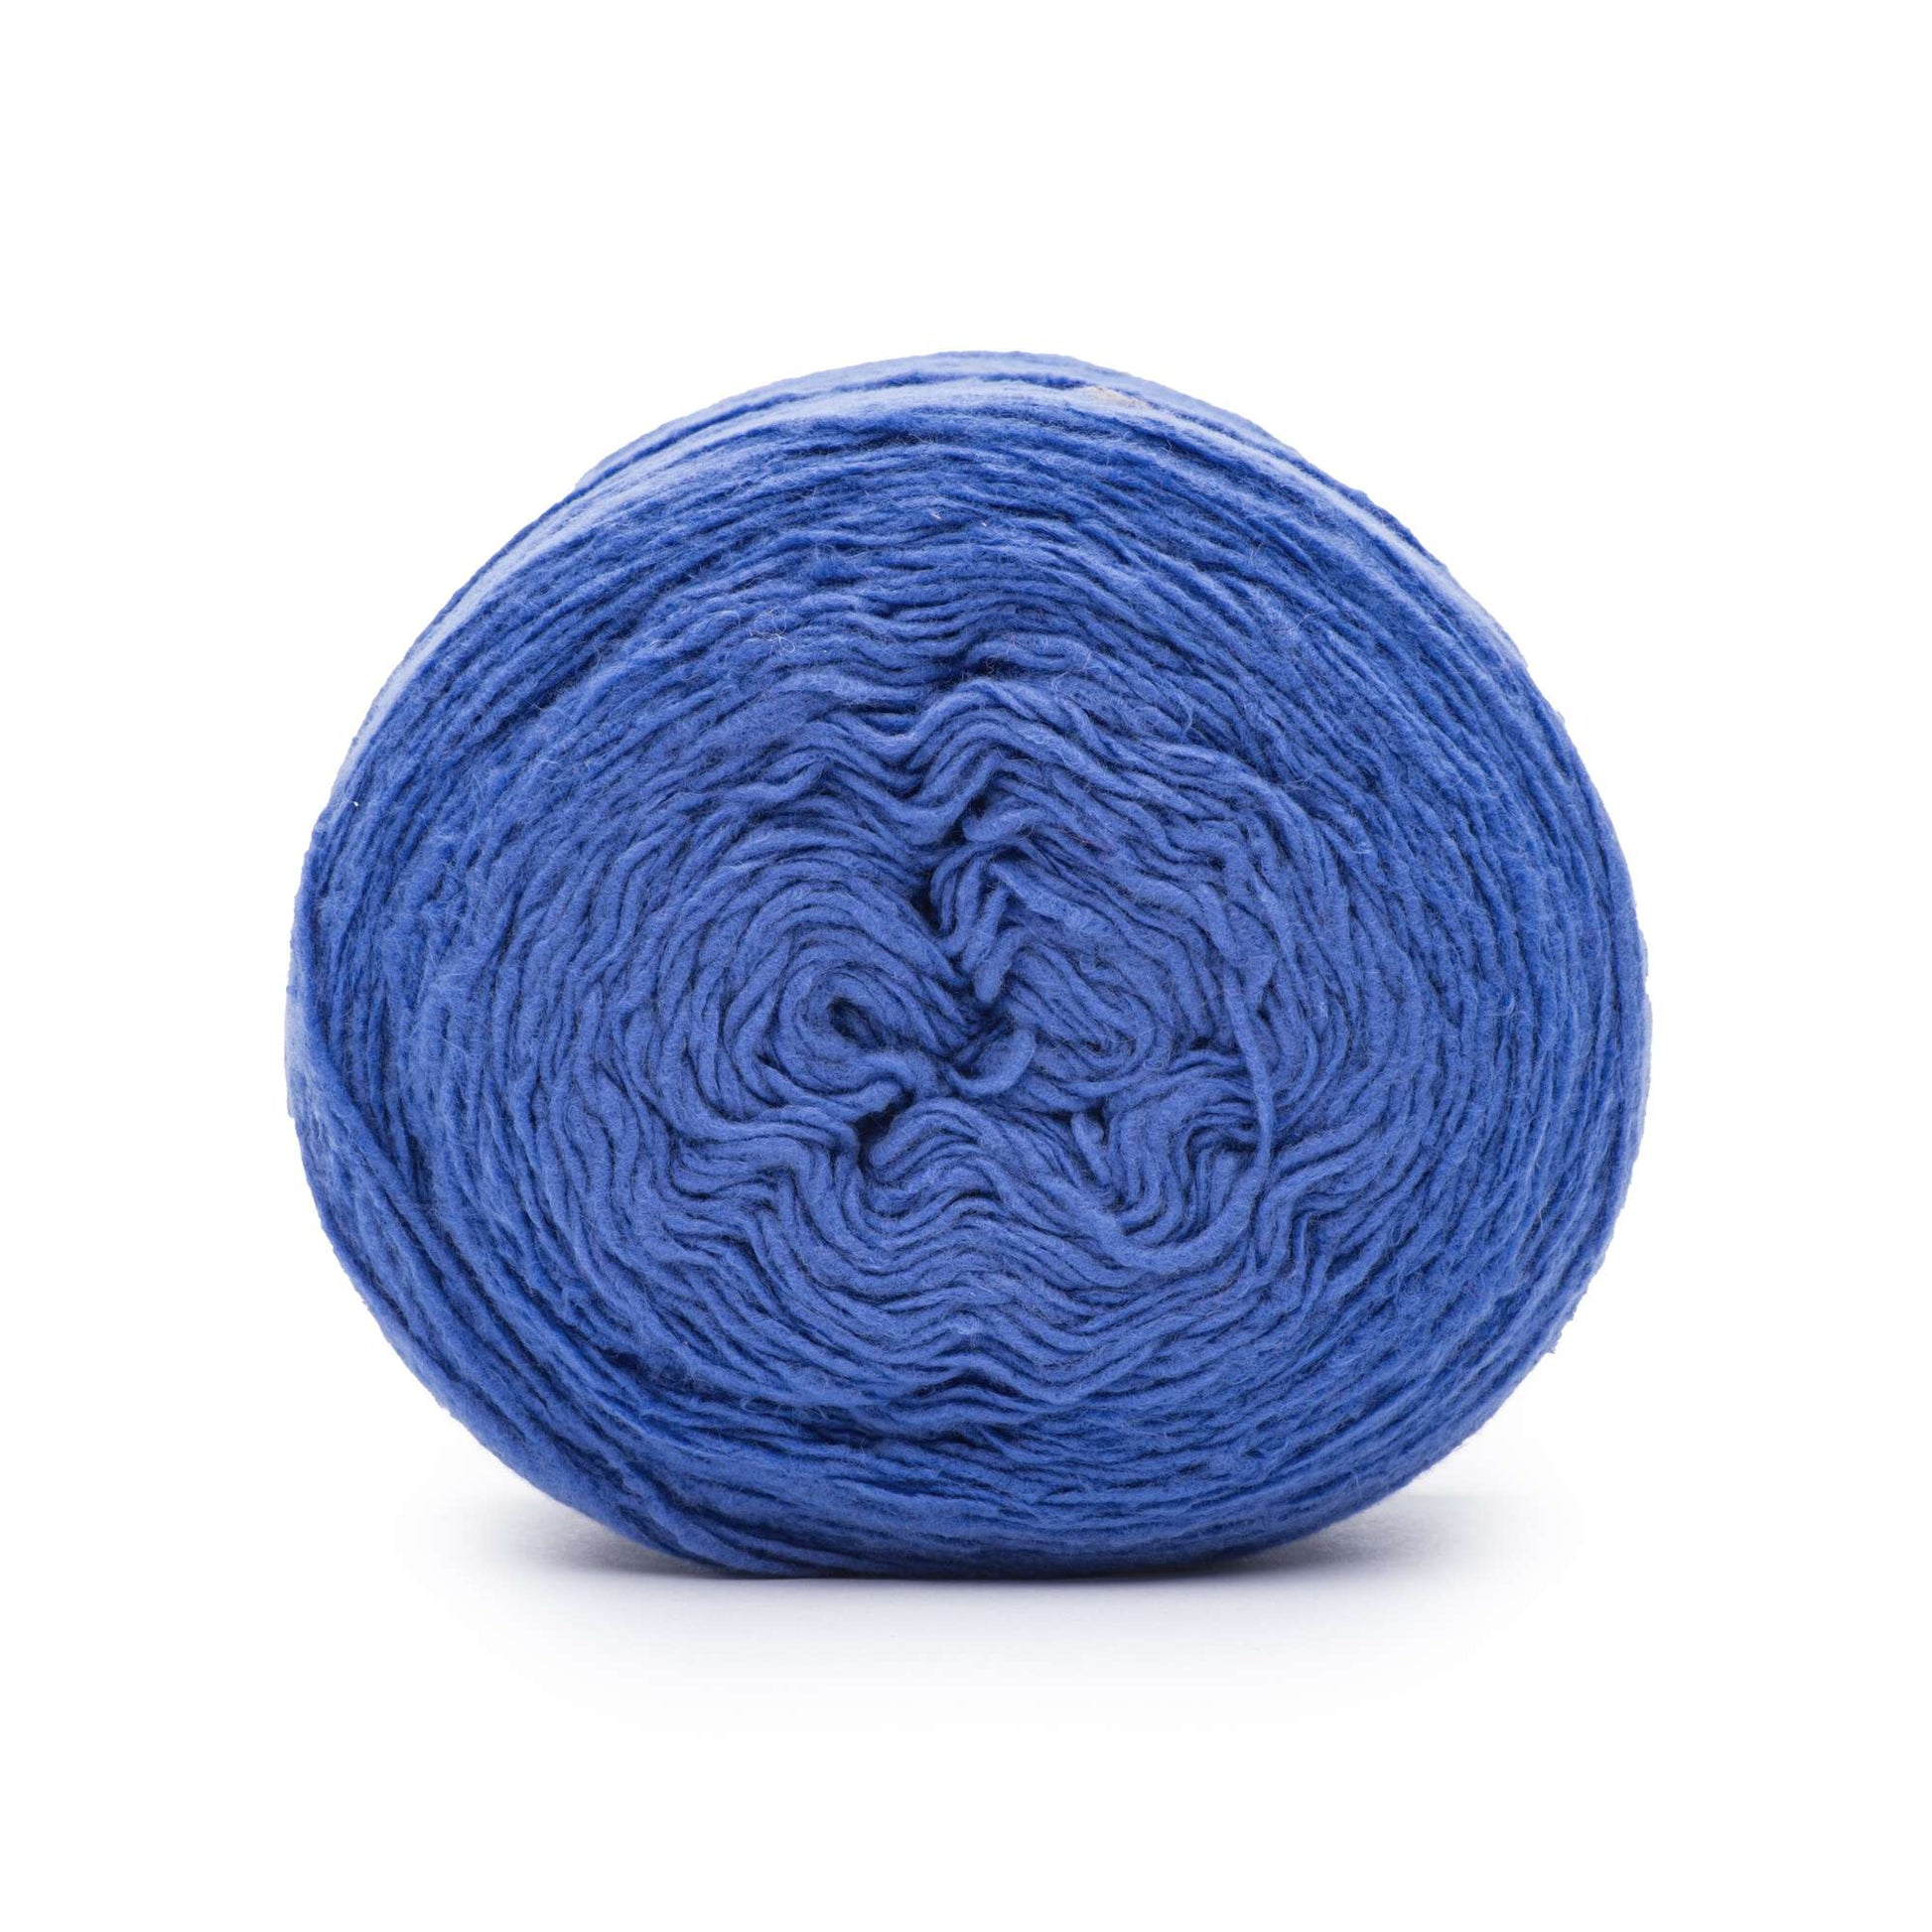 Caron Cakes Yarn - Clearance Shades* - Blue Raspberry in 2023